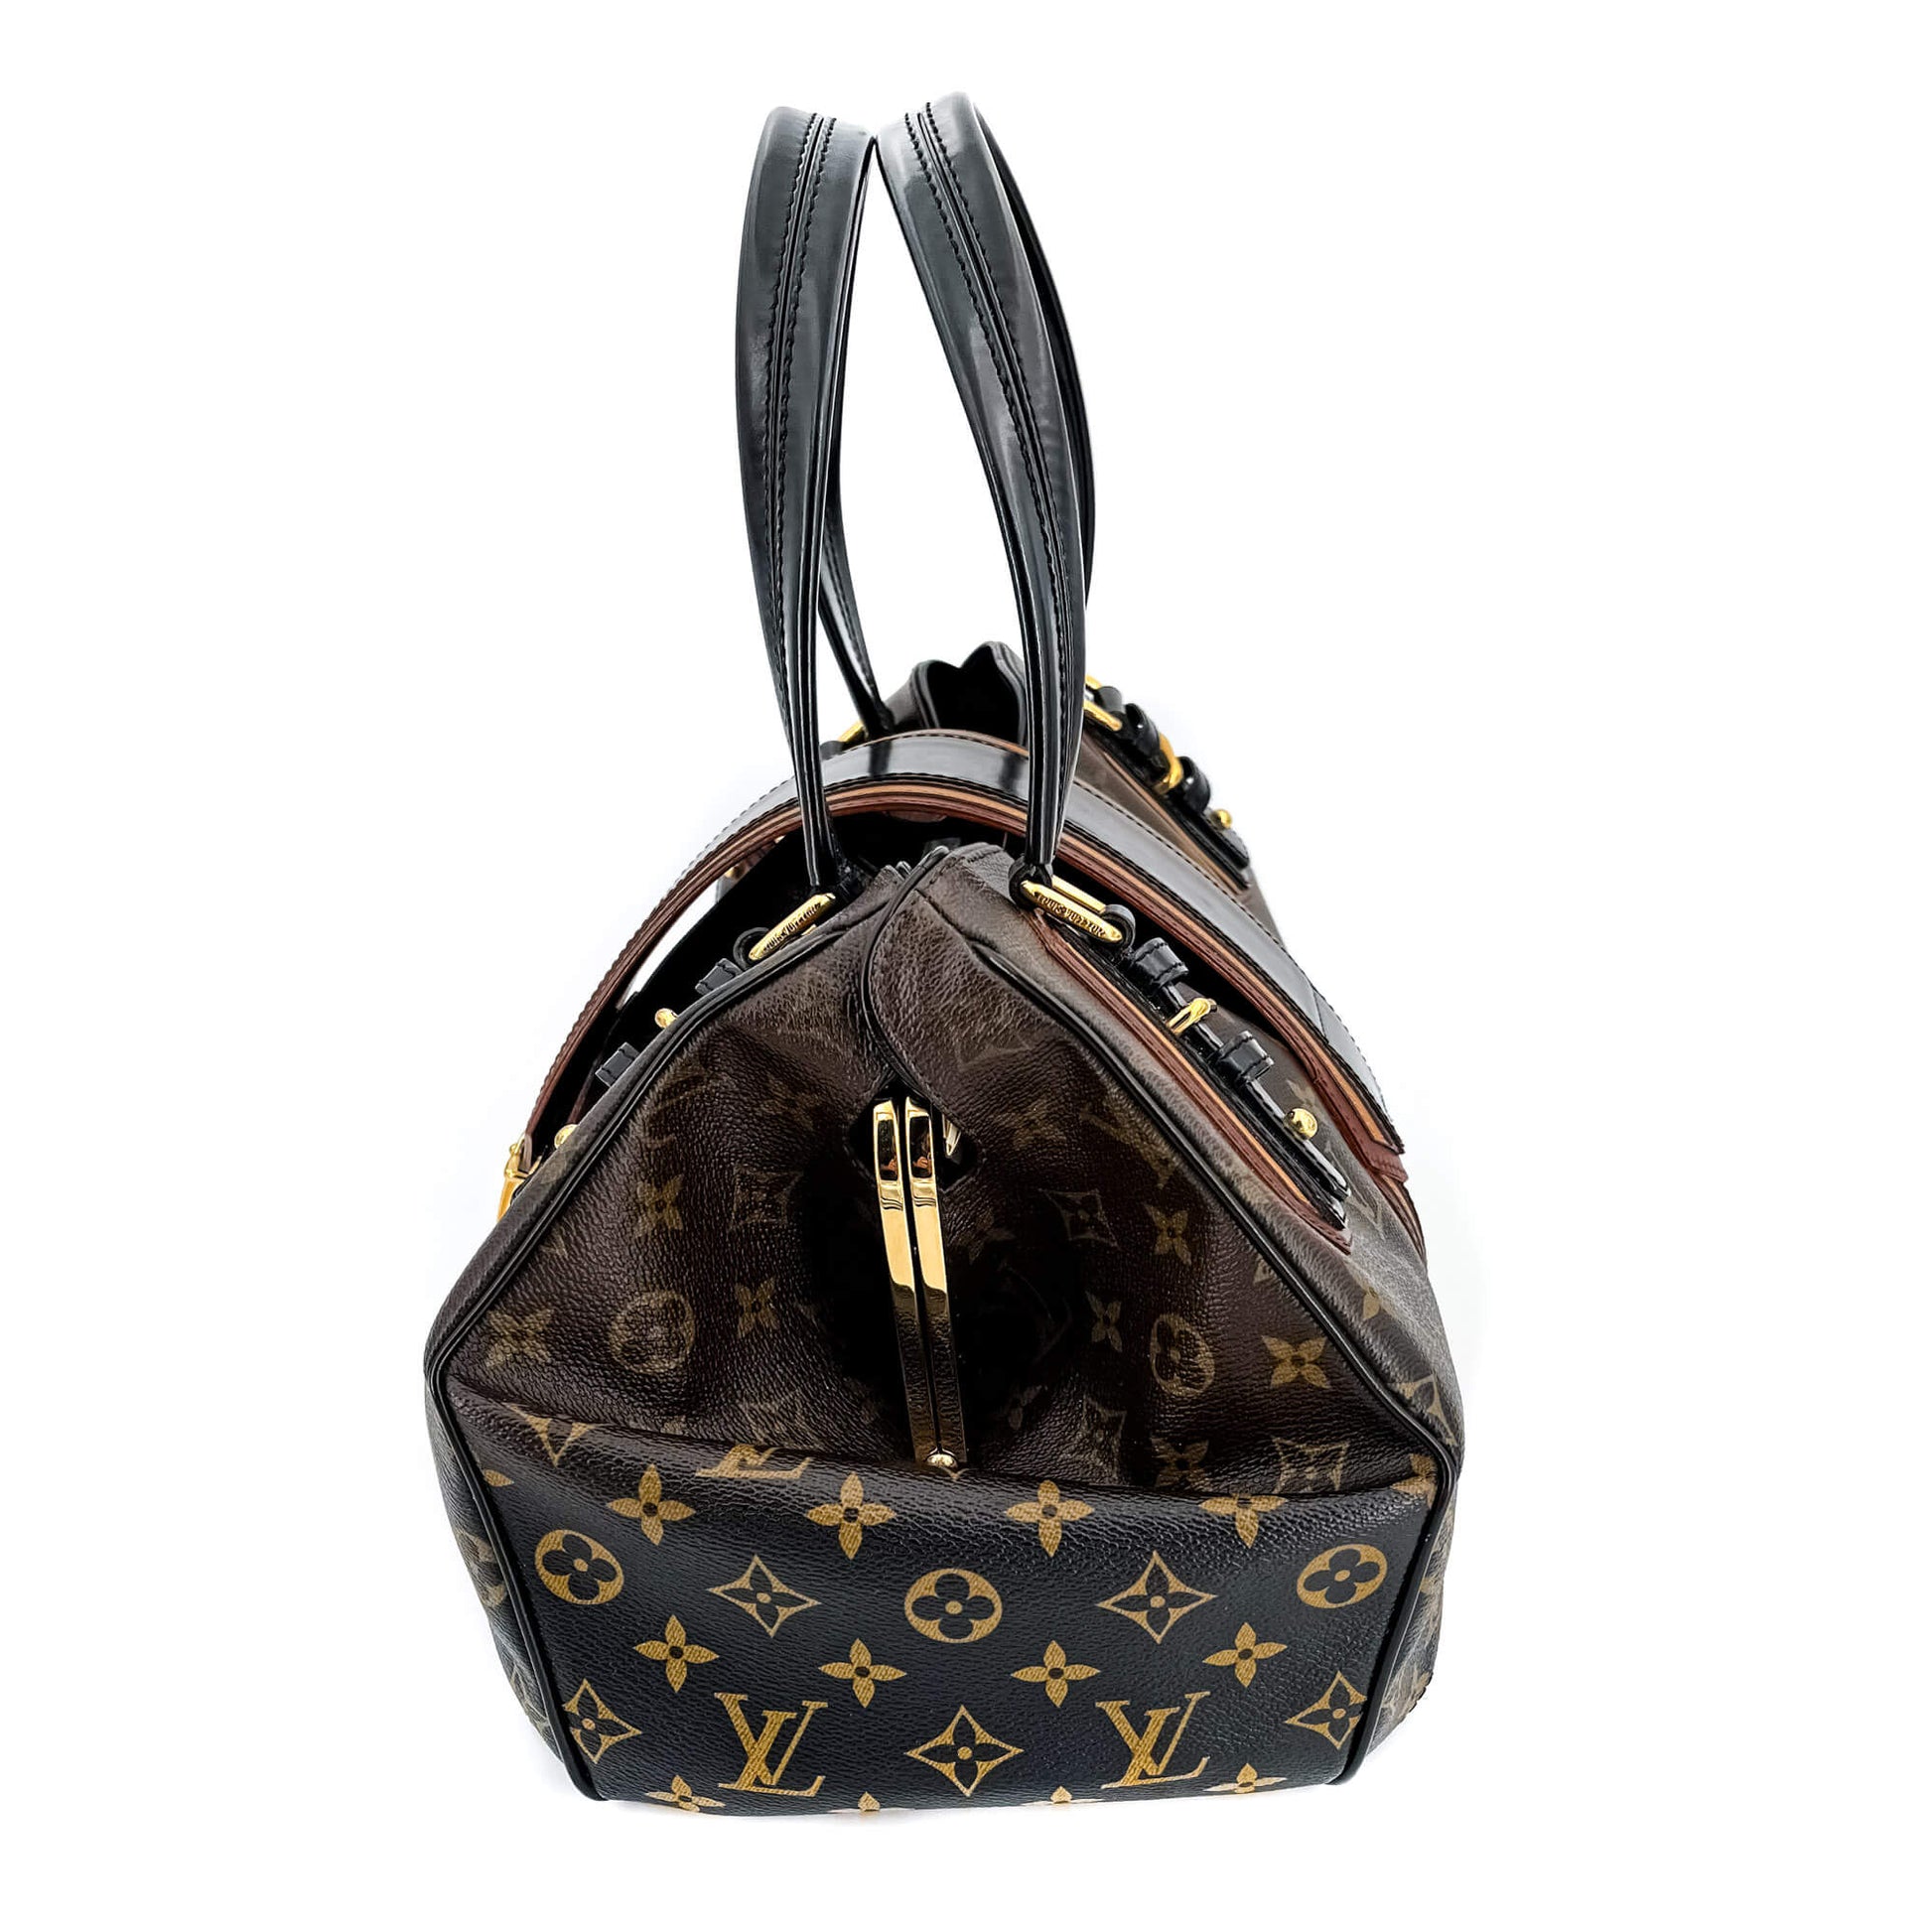 Louis Vuitton Griet Handbag Limited Edition Monogram Mirage at